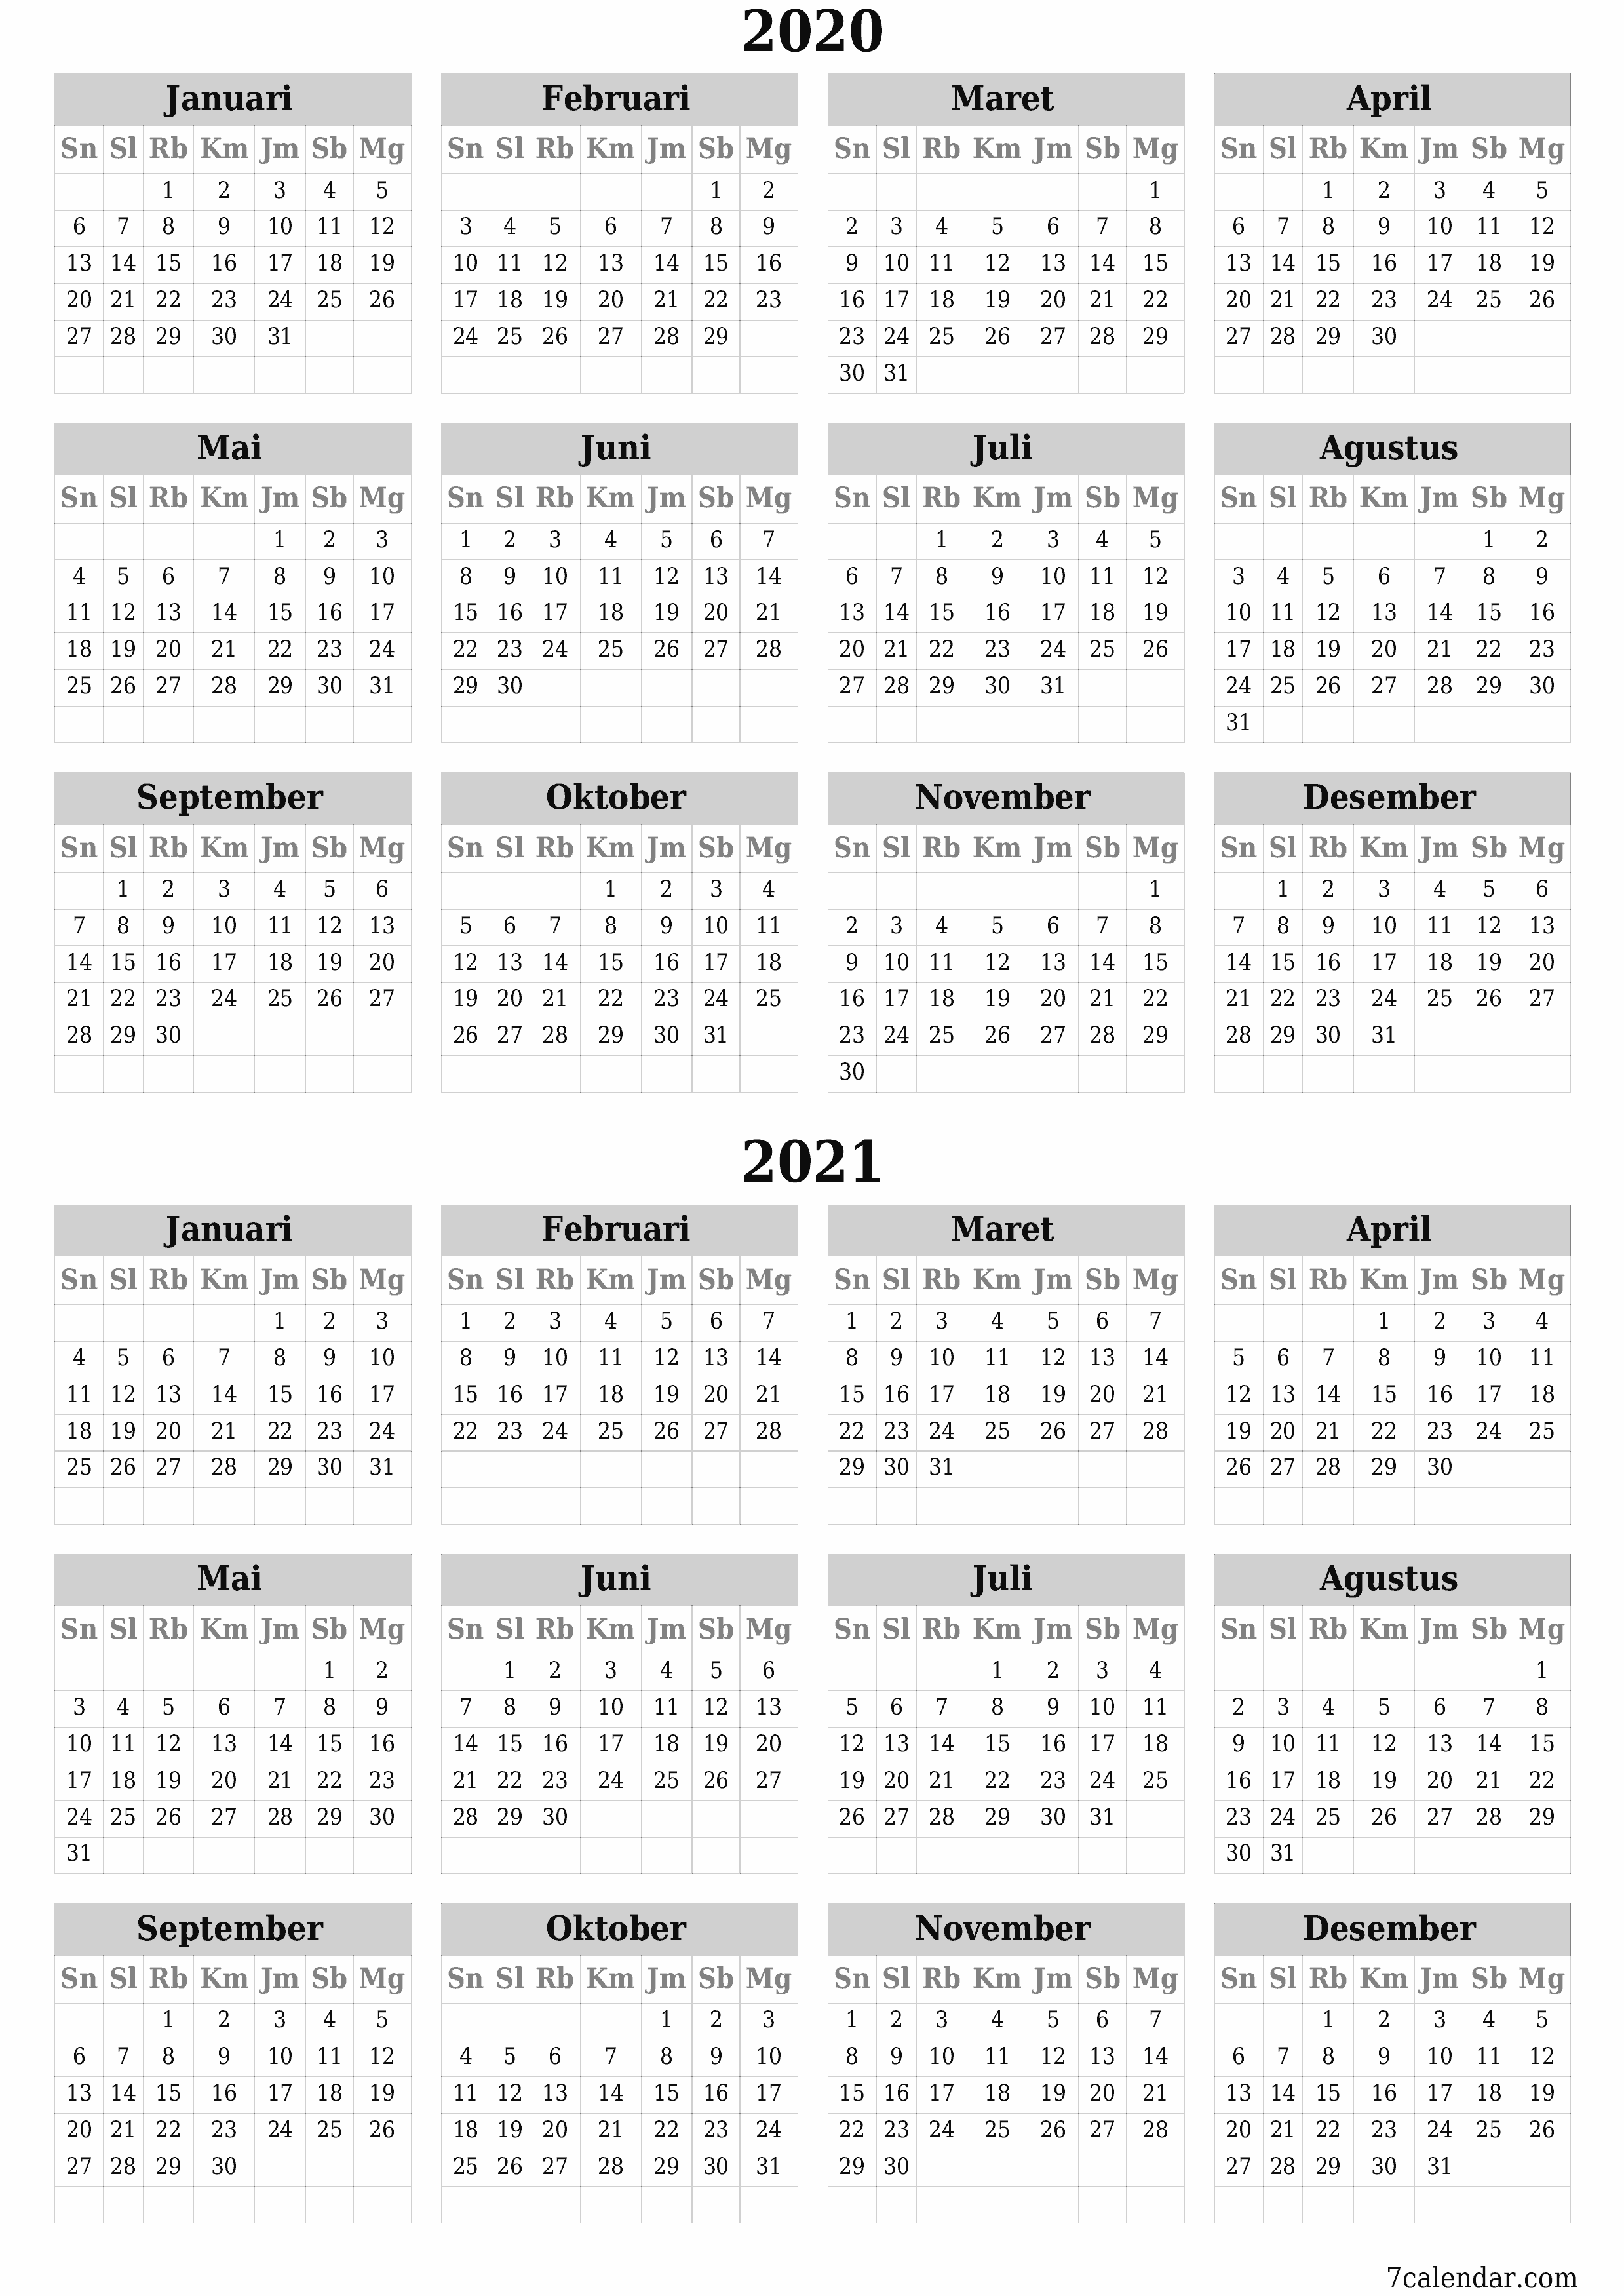  yang dapat dicetak dinding templat gratisvertikal Tahunan kalender Januari (Jan) 2020